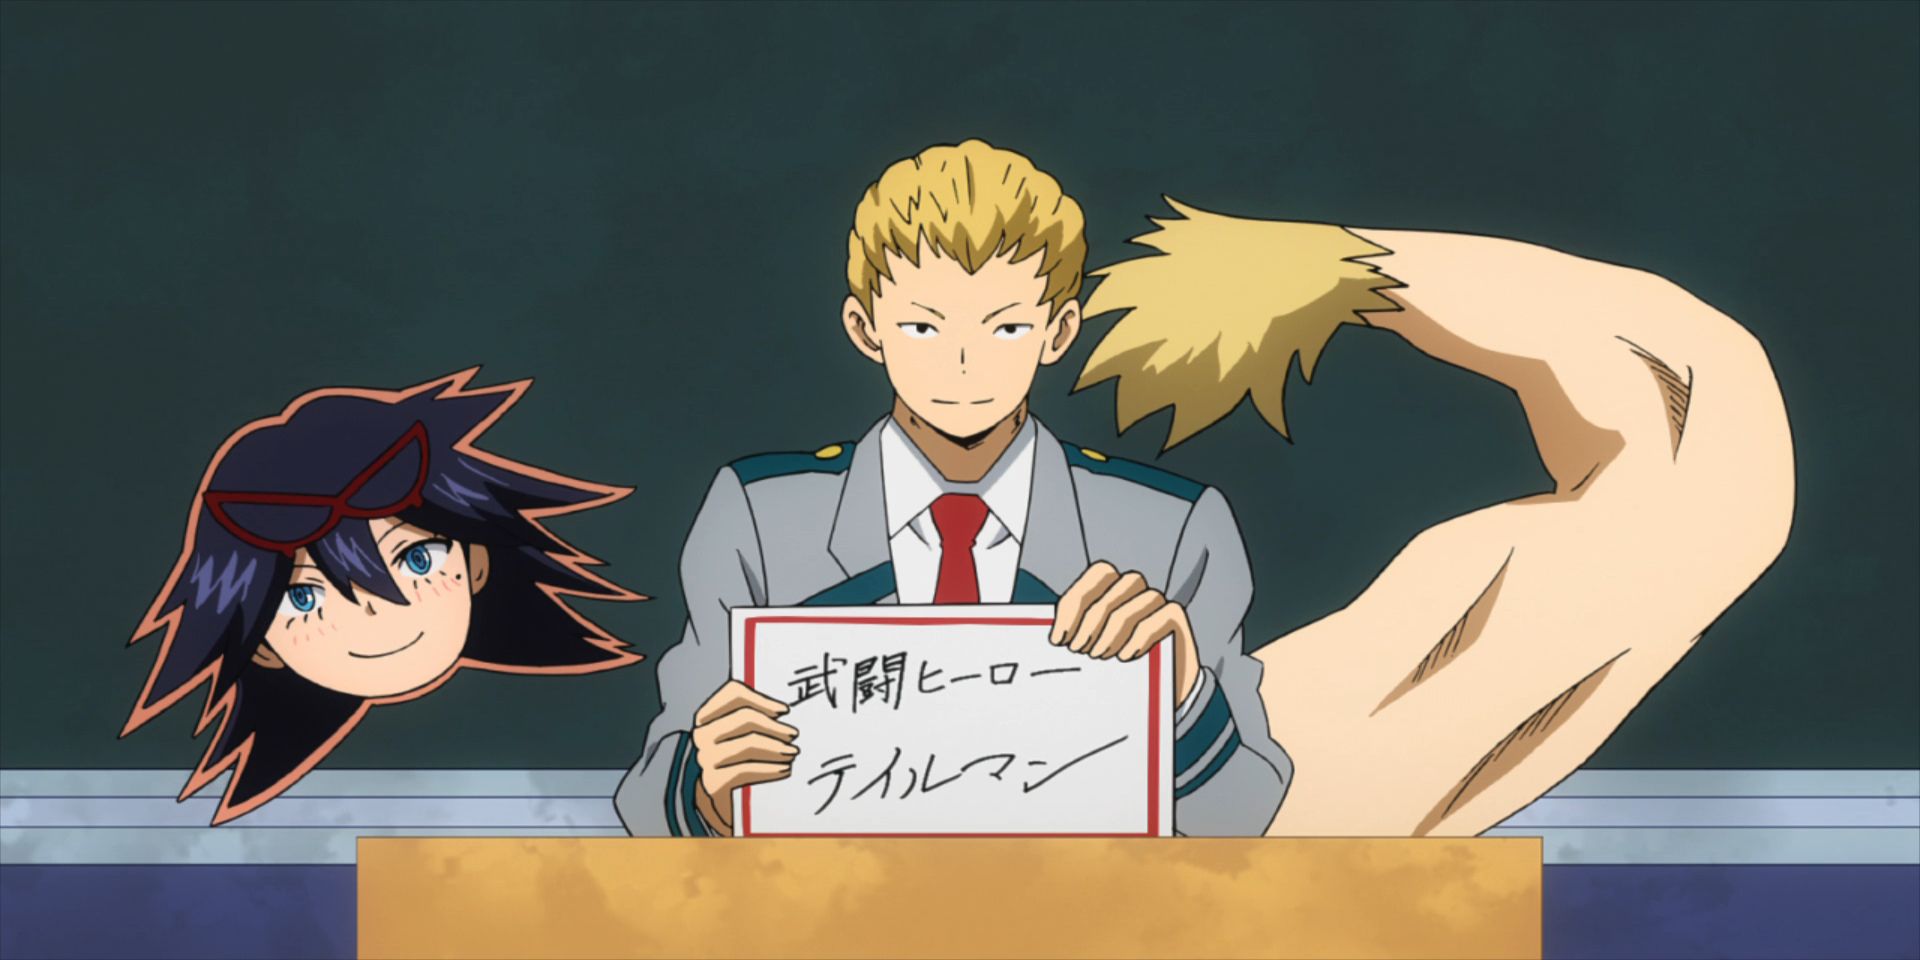 Ojiro revealing his hero name in My Hero Academia.